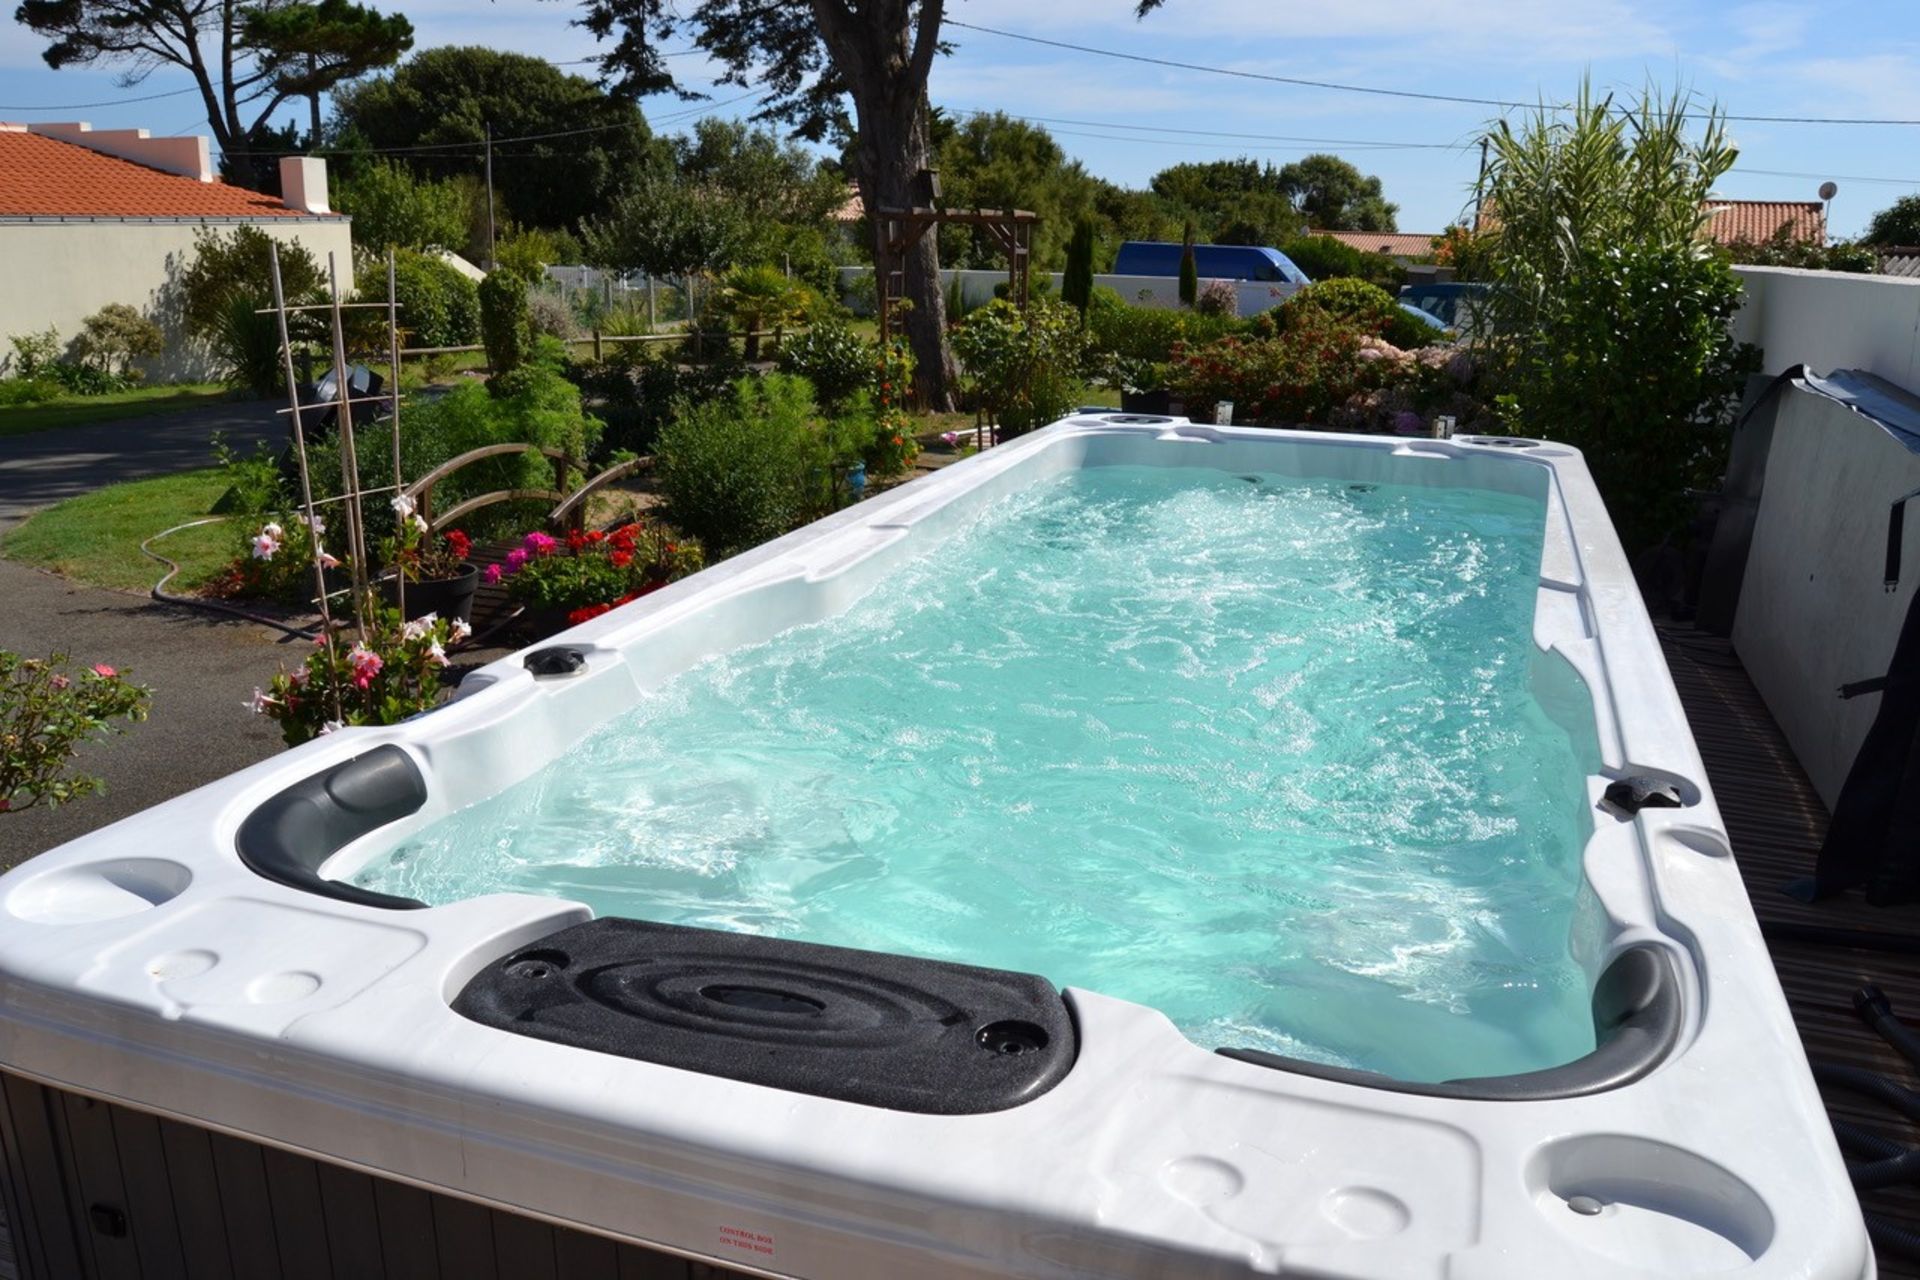 1 x Passion Spa Aquatic 2 Swim Spa - Brand New With Warranty - RRP: £20,500 - CL774 - Location: - Bild 3 aus 4